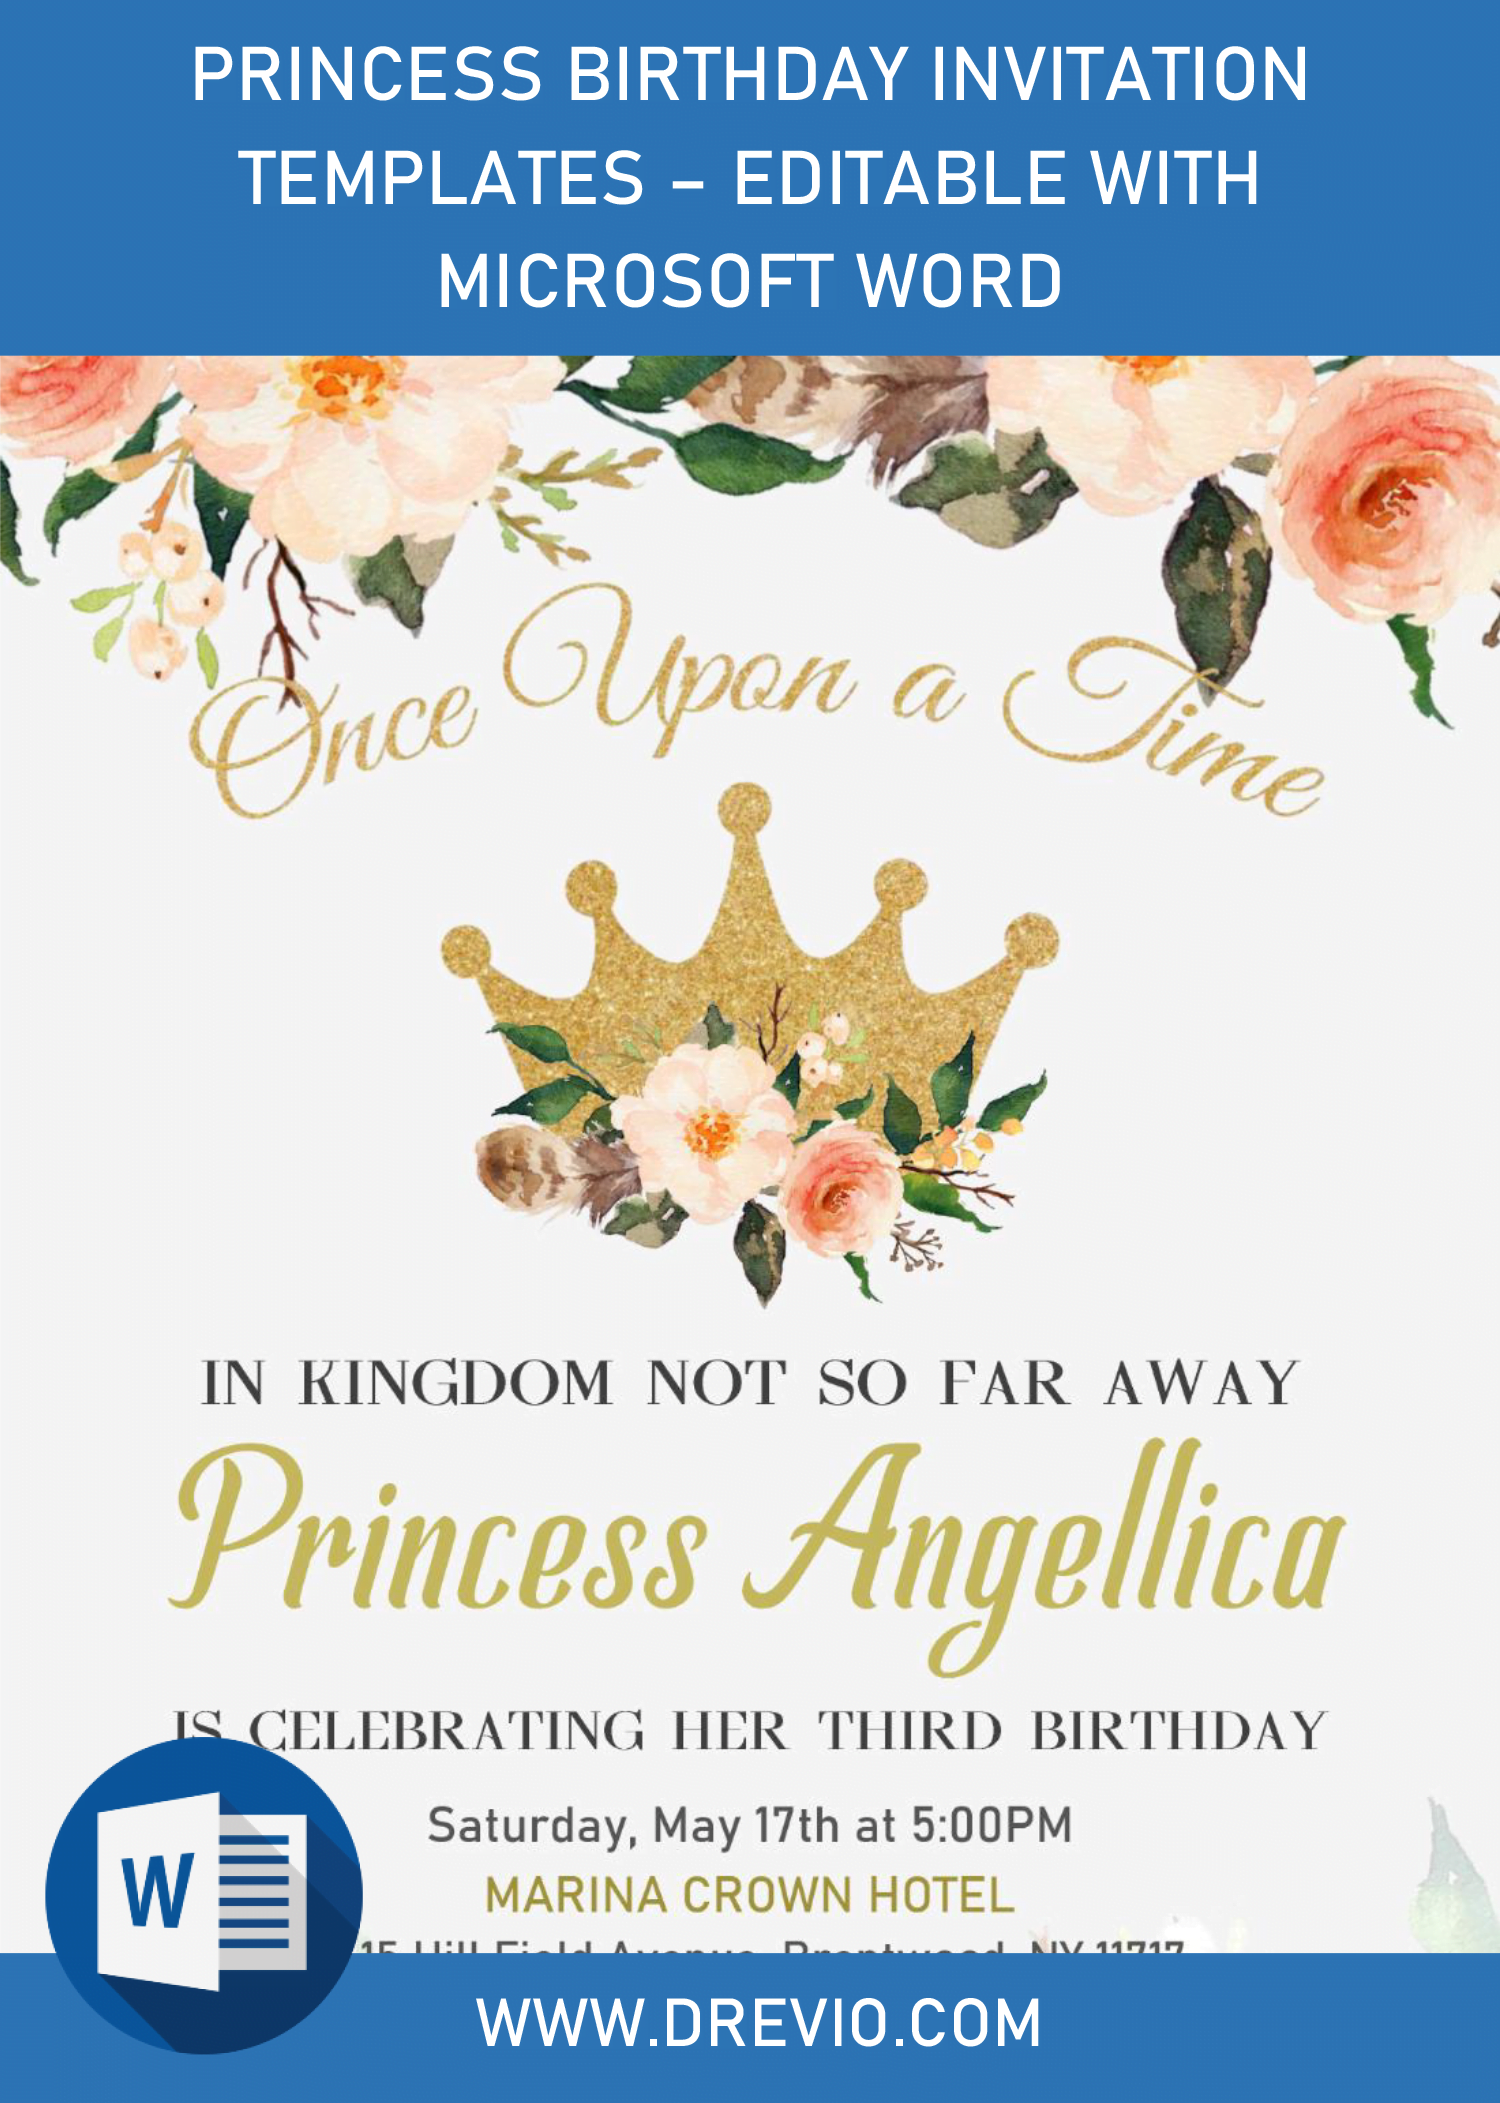 Princess Birthday Invitation Templates - Editable With Microsoft Word